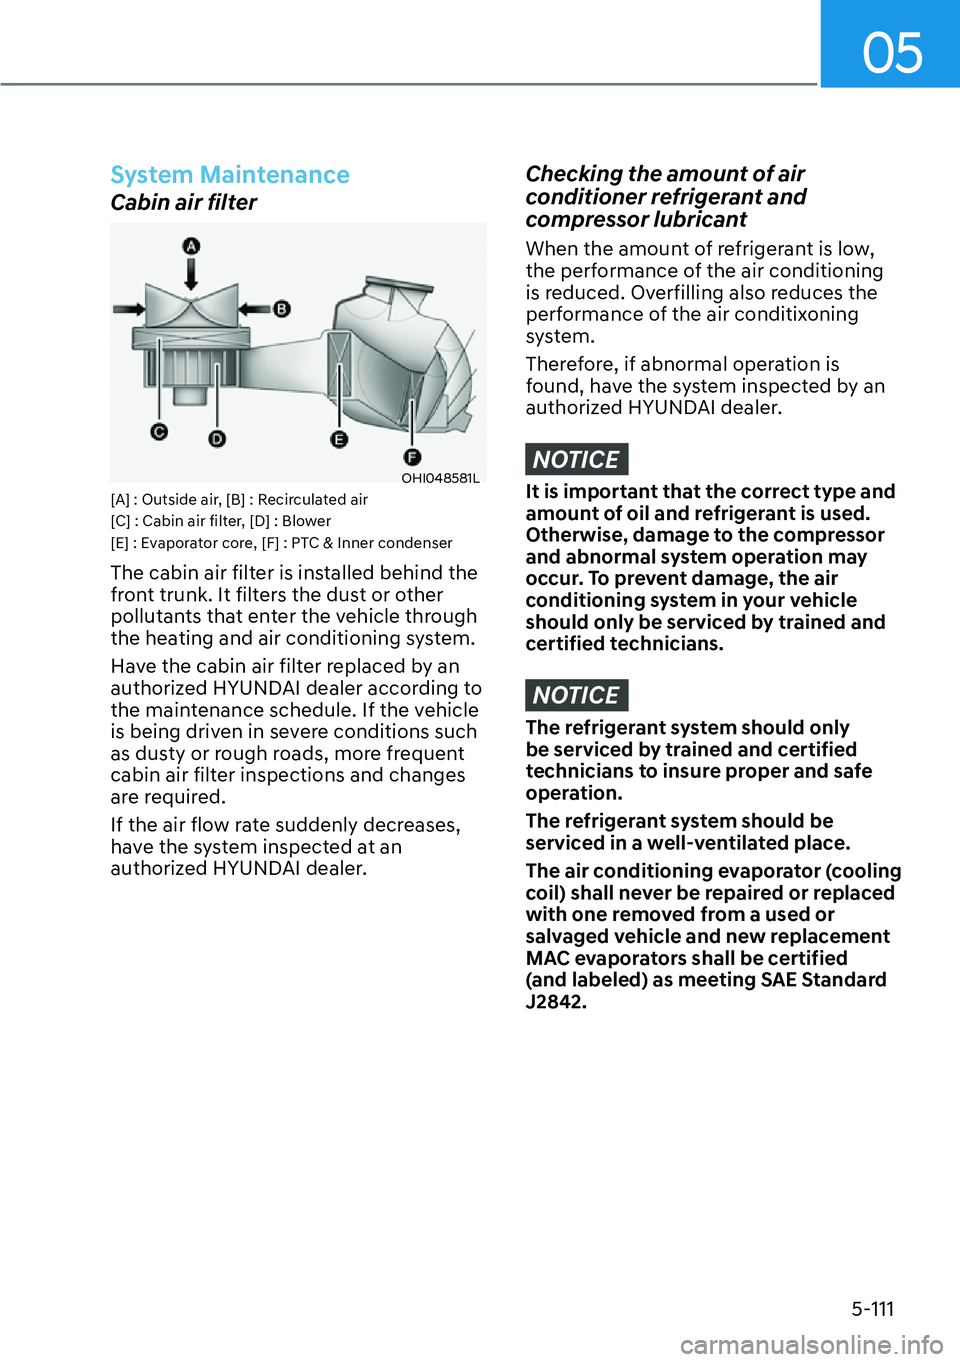 HYUNDAI IONIQ 5 2022  Owners Manual 05
5-111
System Maintenance
Cabin air filter
OHI048581L[A] : Outside air, [B] : Recirculated air
[C] : Cabin air filter, [D] : Blower
[E] : Evaporator core, [F] : PTC & Inner condenser
The cabin air f